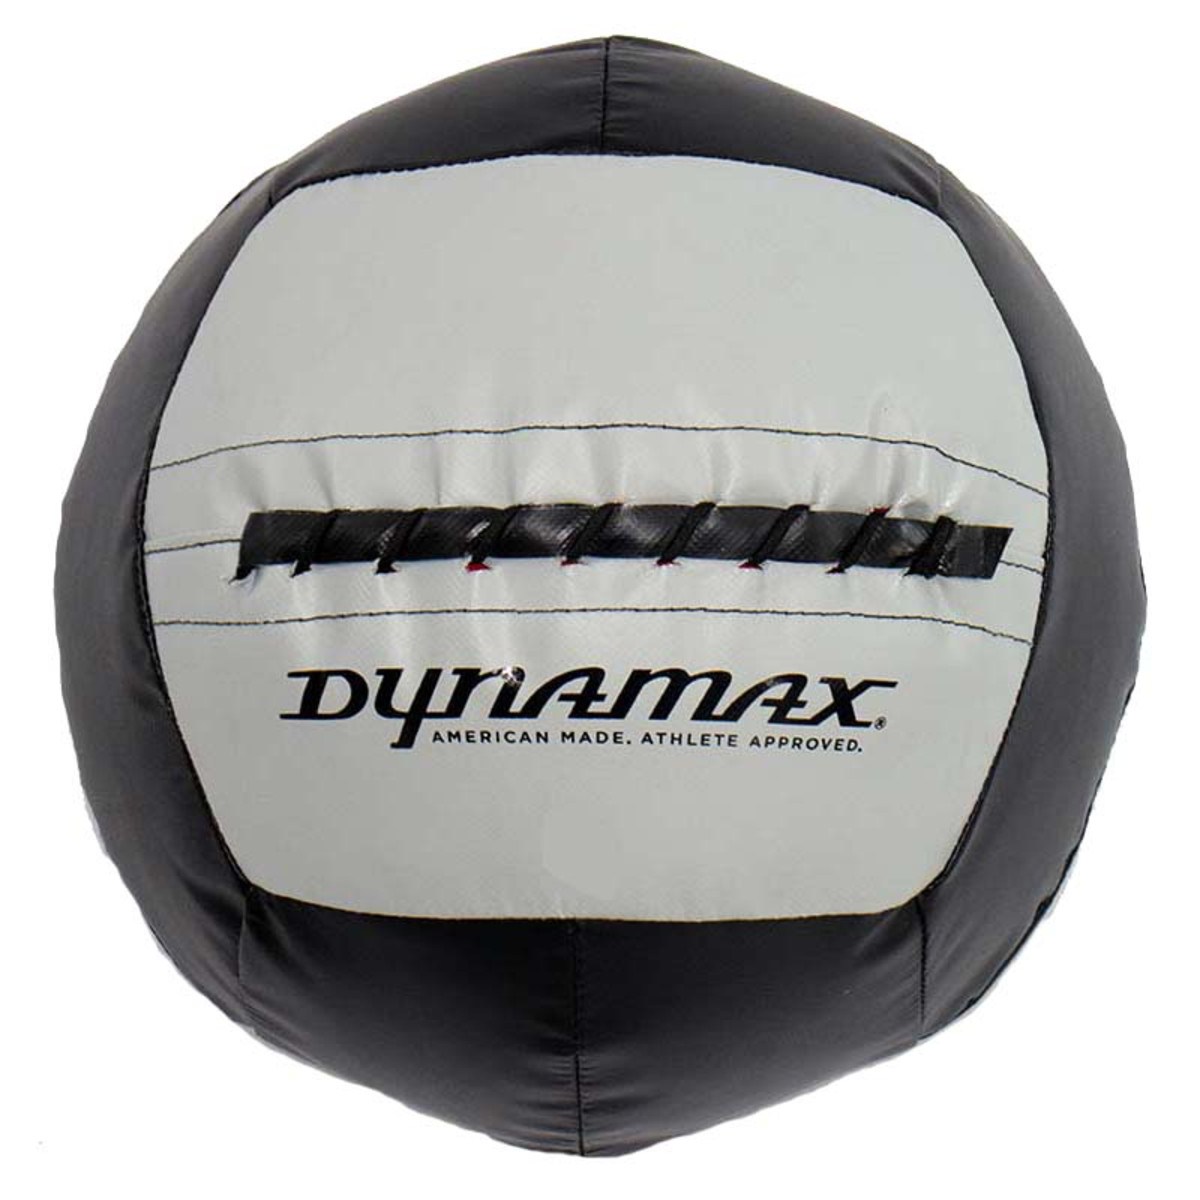 Dynamax Medicine Ball Image 9